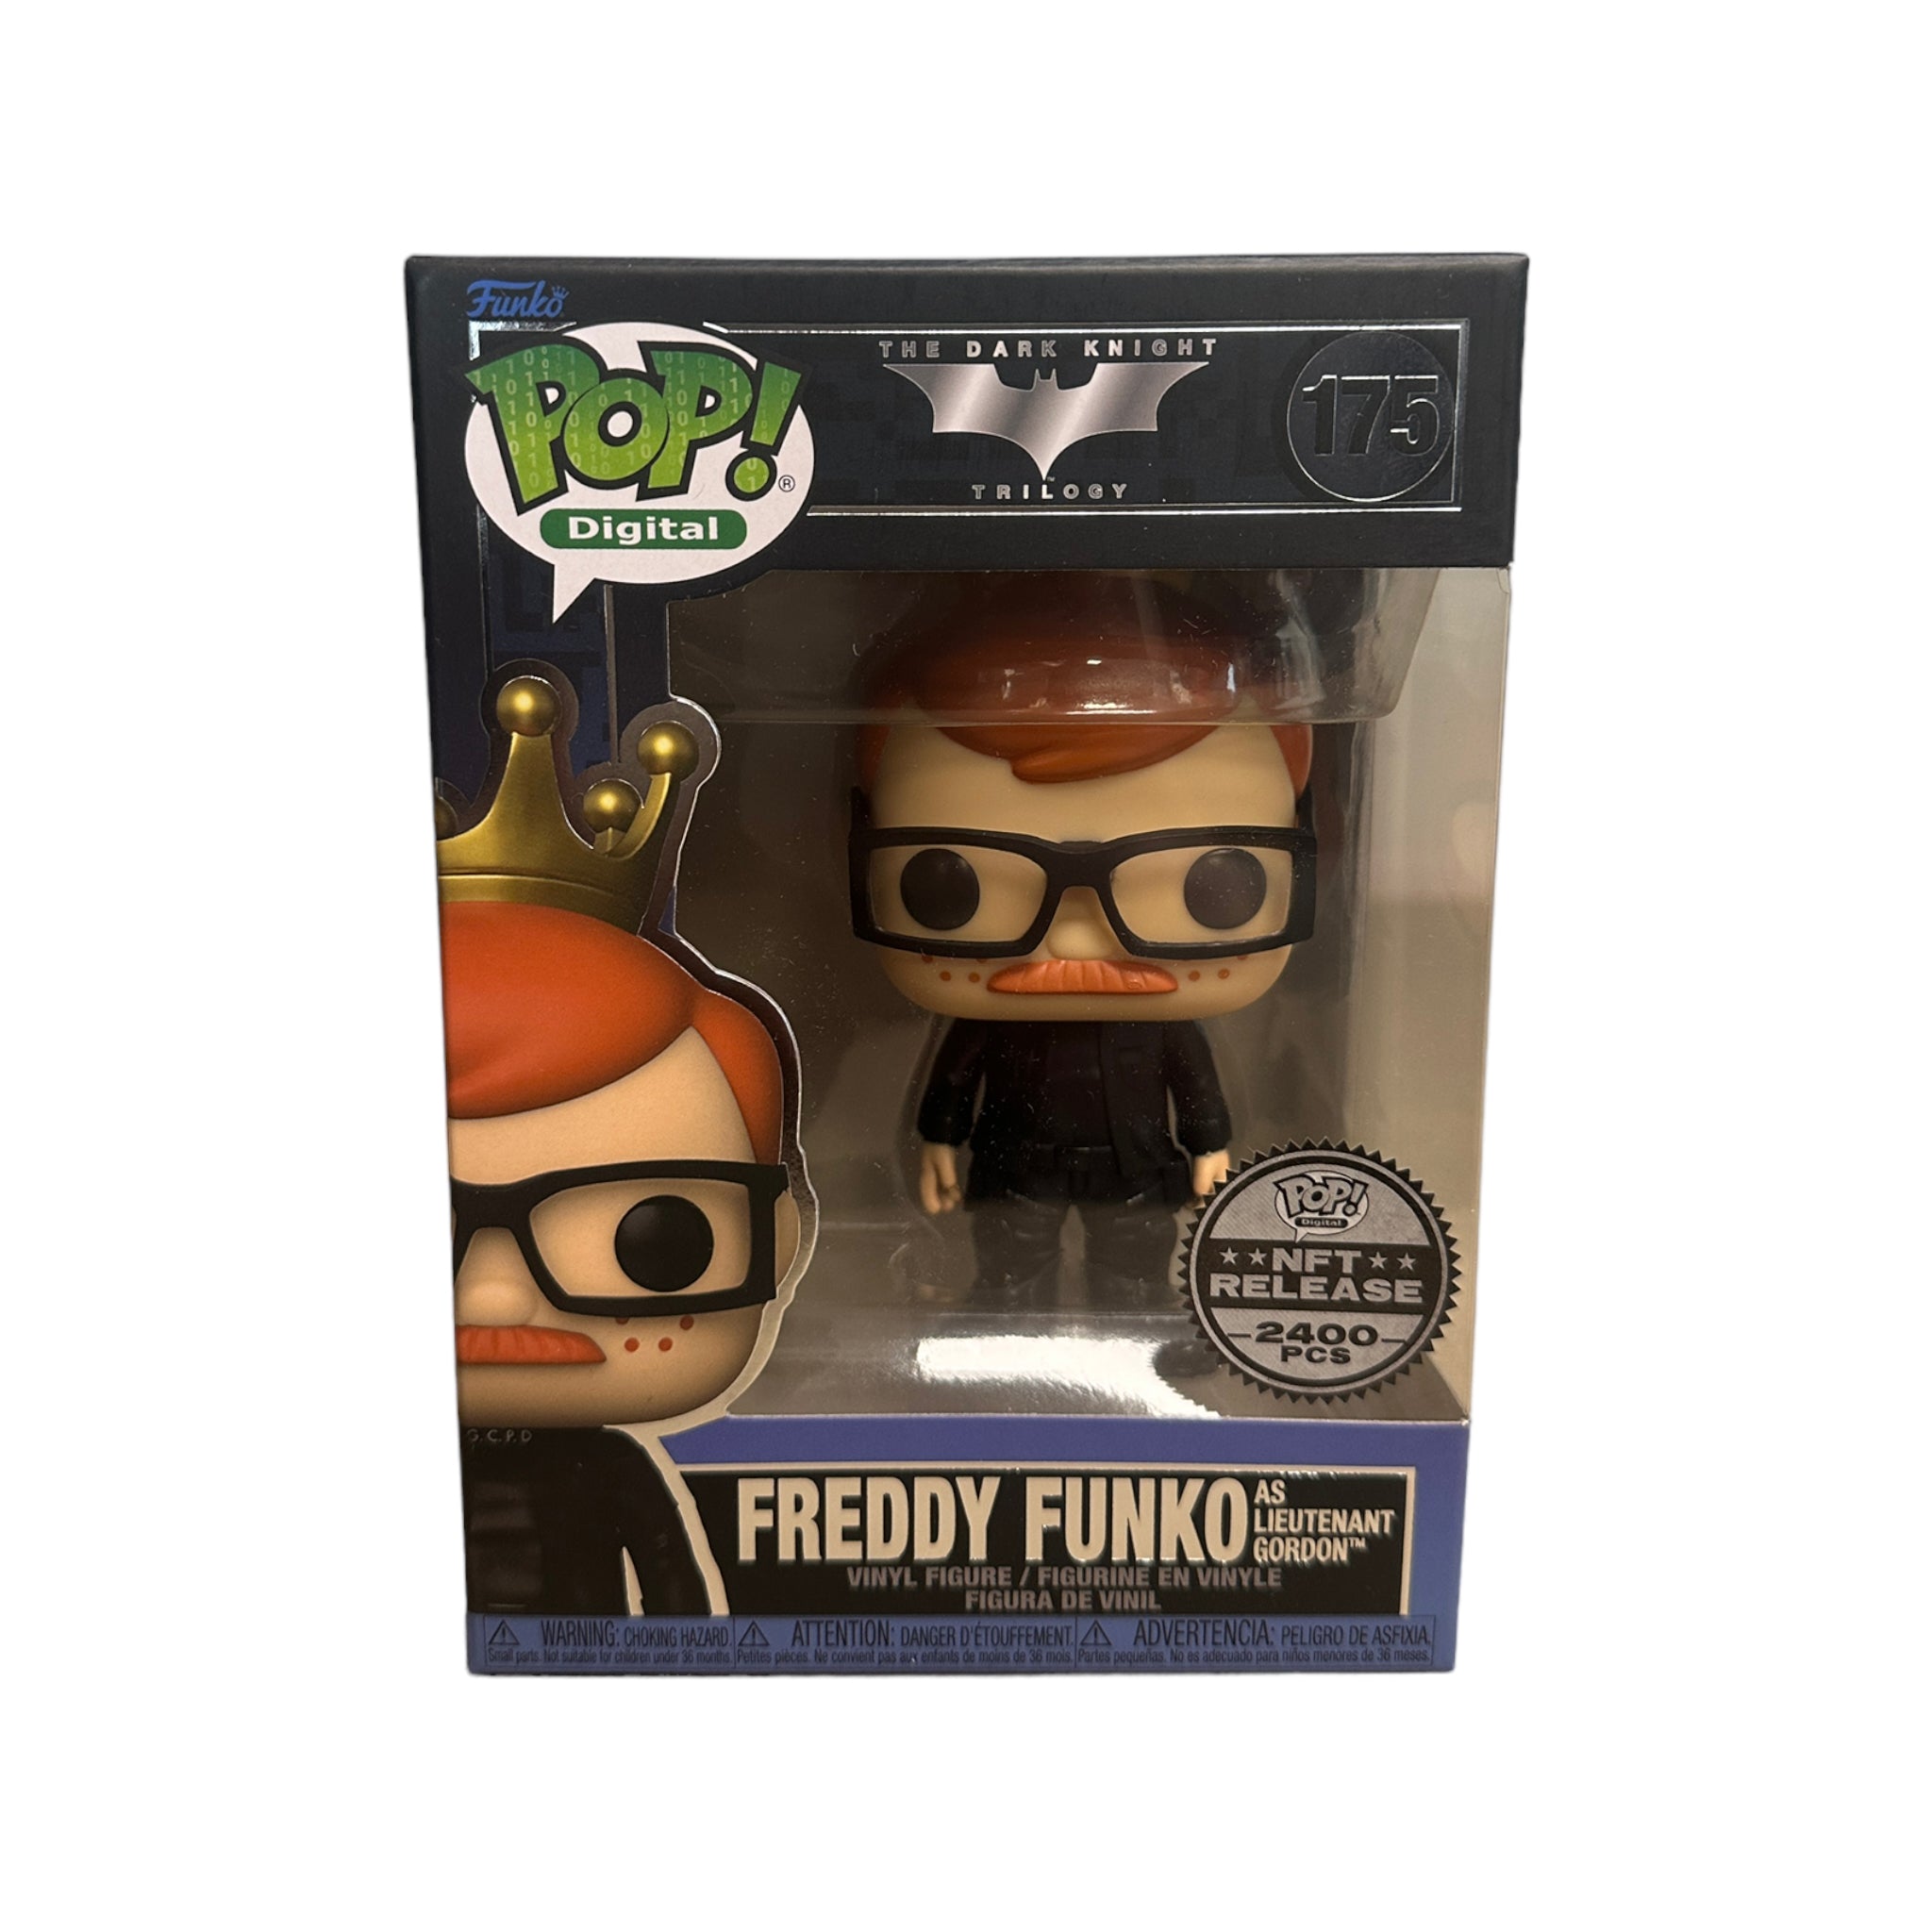 Freddy Funko as Lieutenant Gordon #175 Funko Pop! - The Dark Knight Trilogy - NFT Release Exclusive LE2400 Pcs - Condition 9.5/10